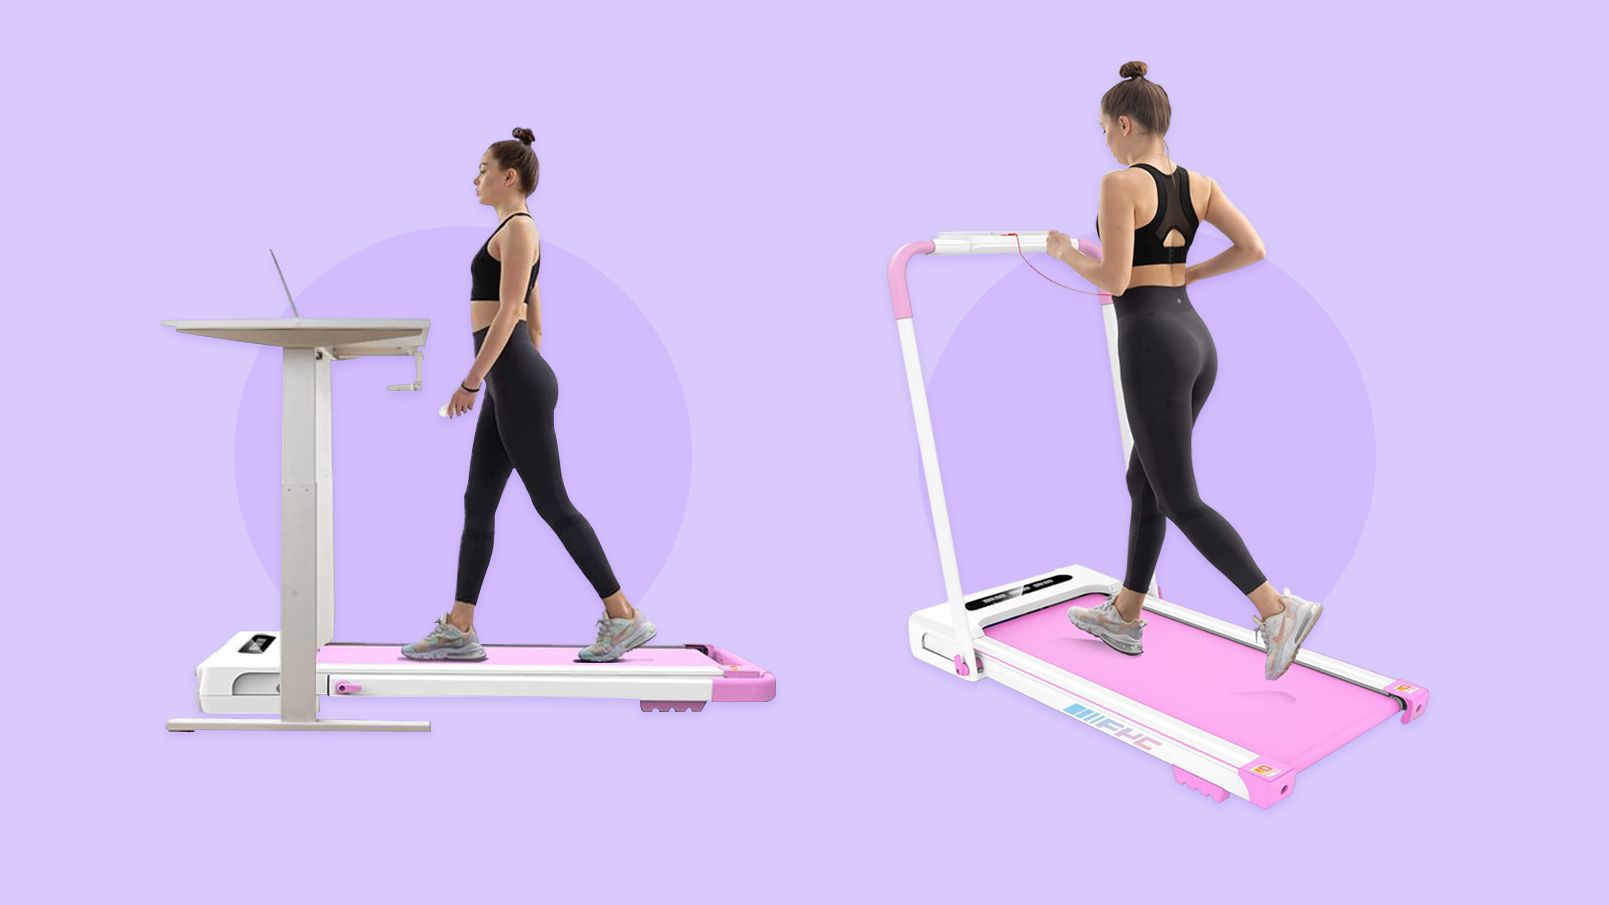 Buy Best Treadmill Home Gym Walking Machine